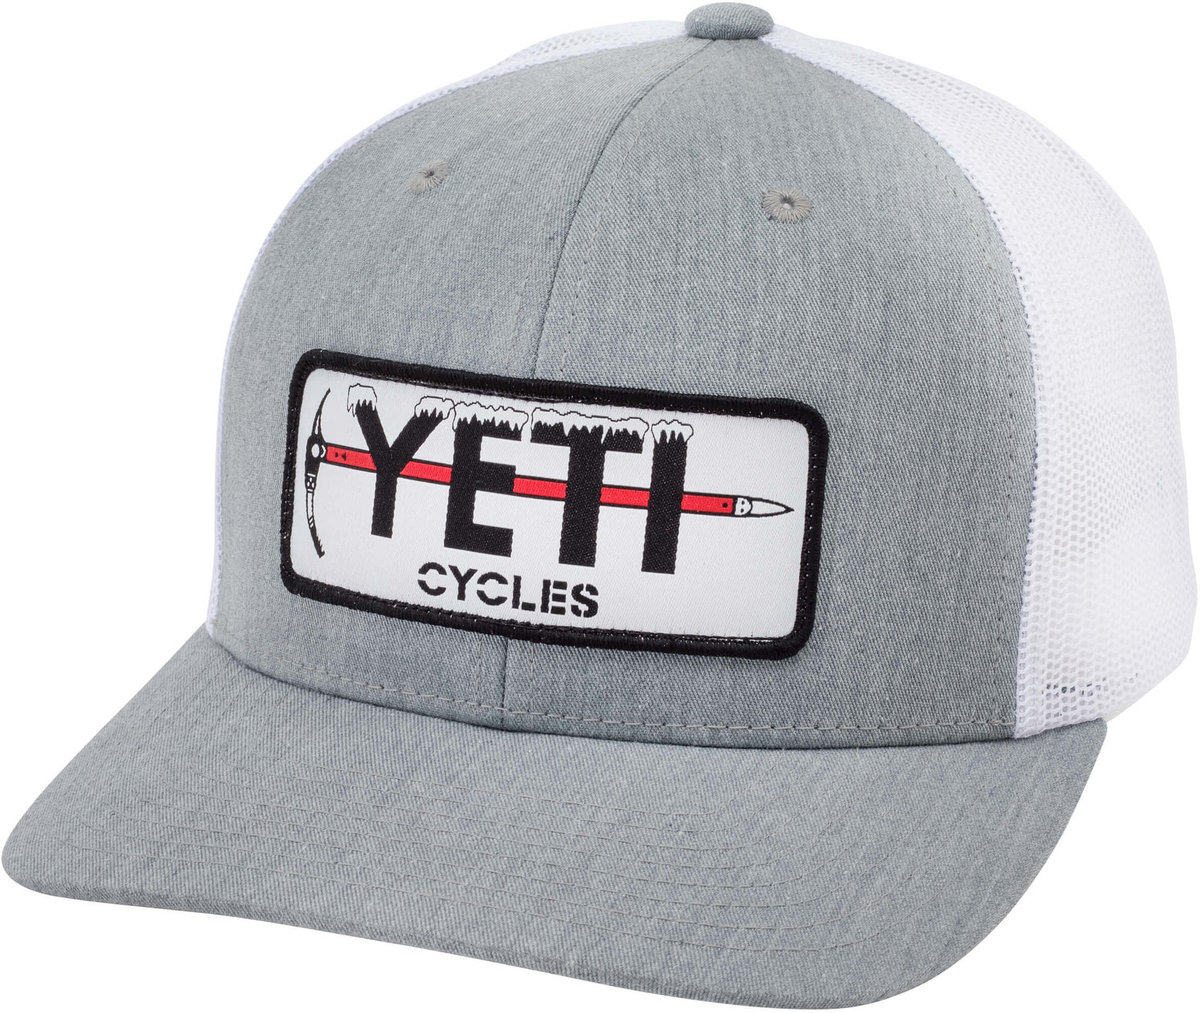 Yeti Cycles Yeti CO Flag Cuffed Beanie - proVelo Bicycles